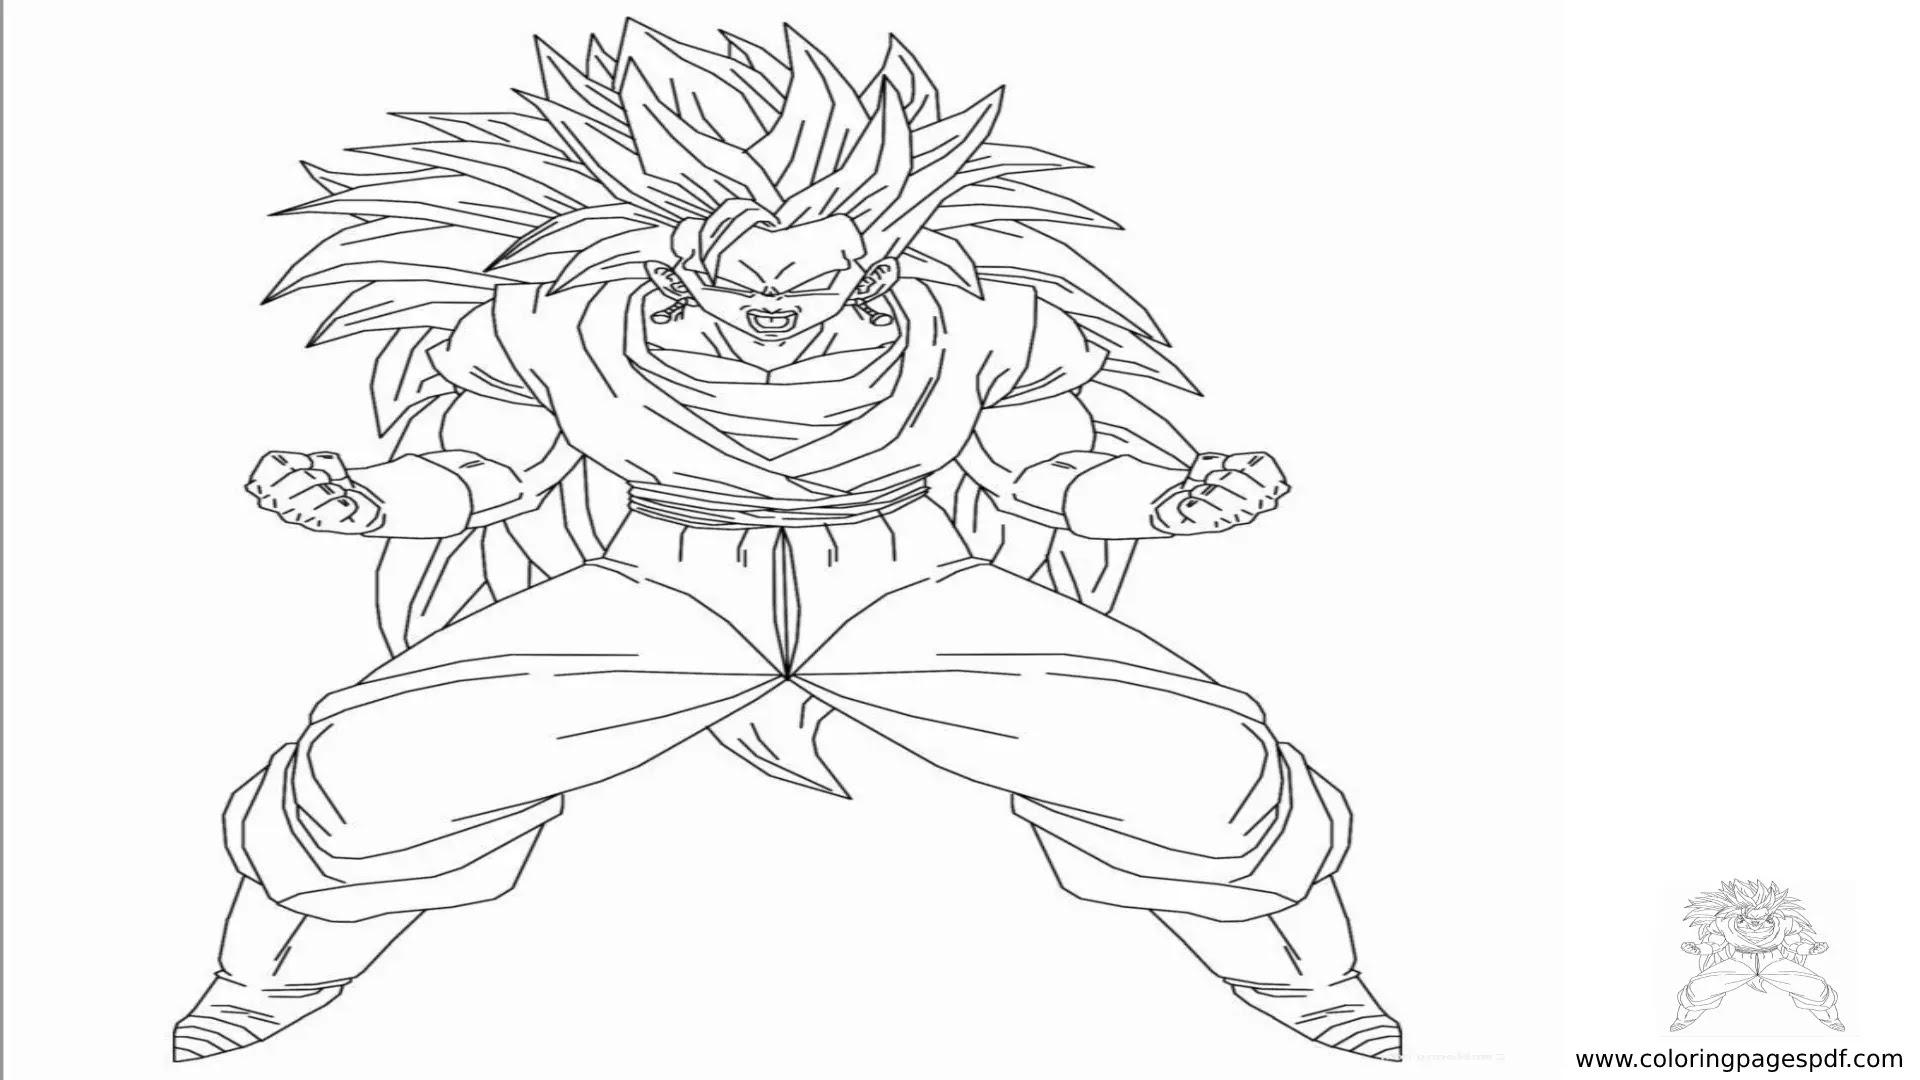 Coloring Page Of Goku Super Saiyan 3